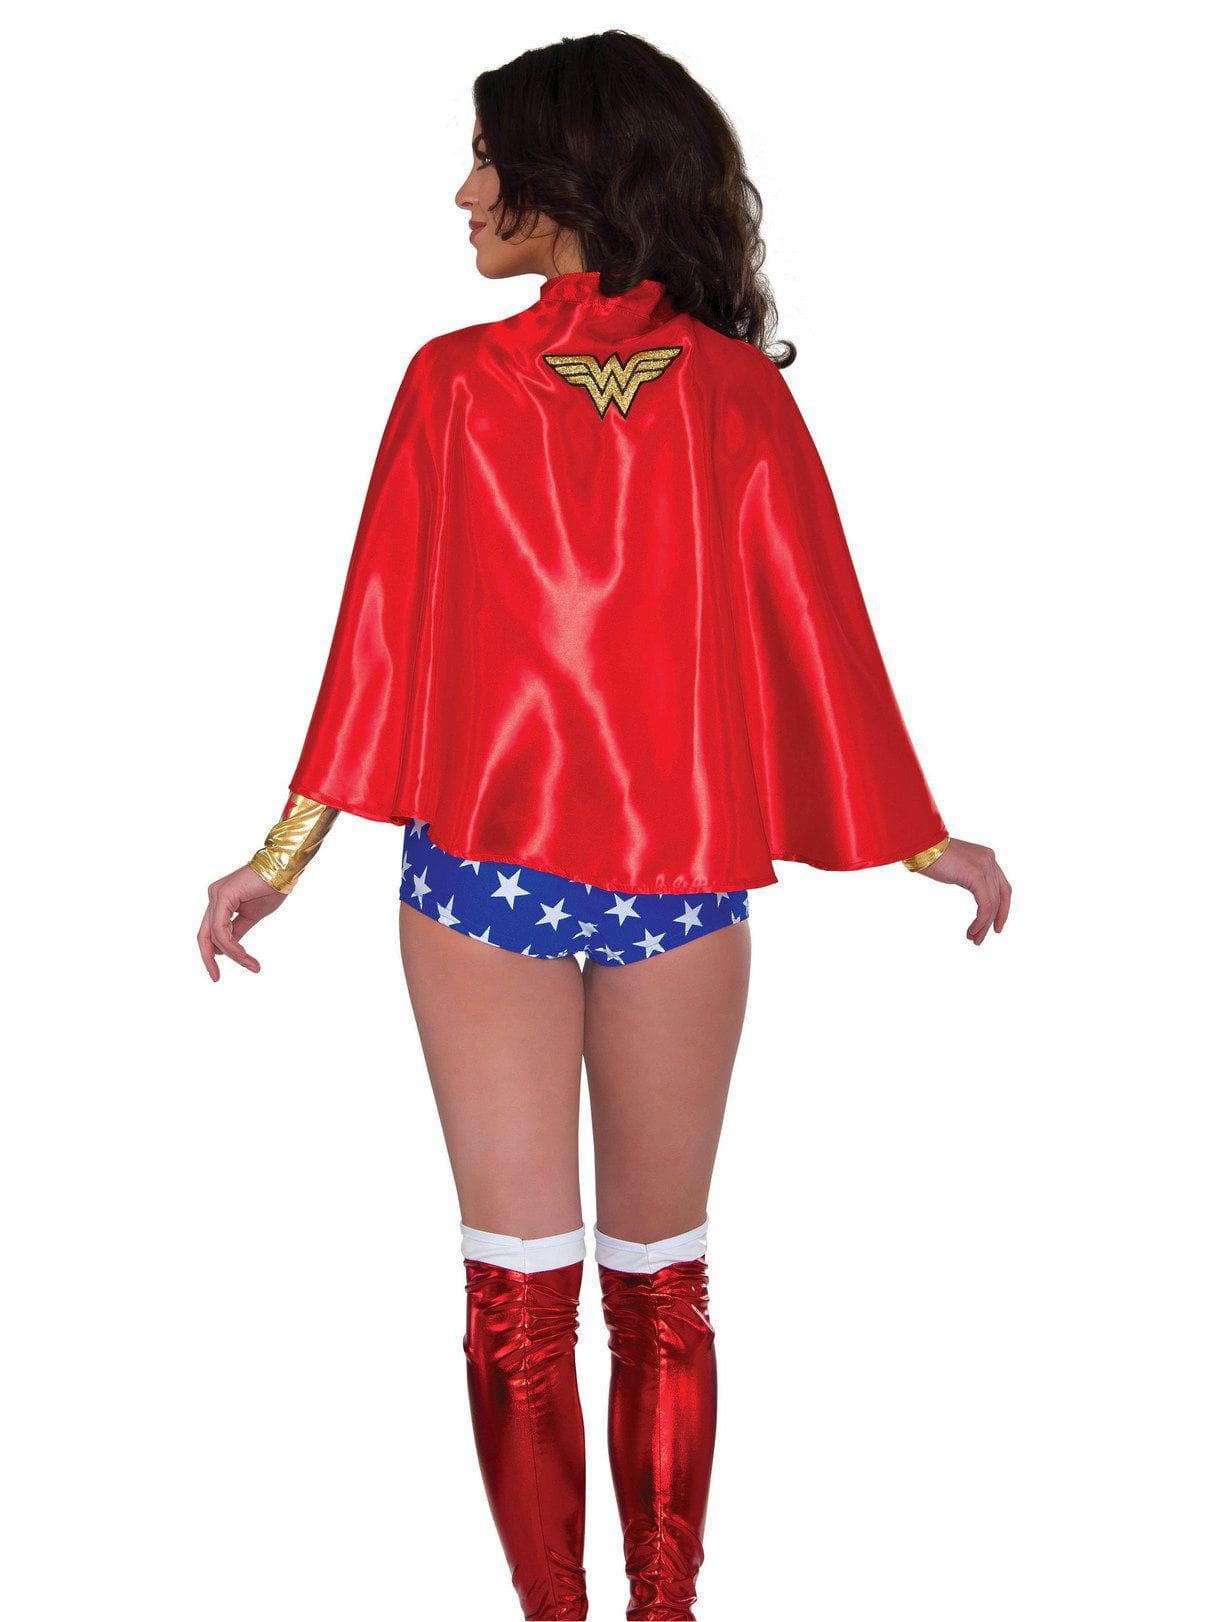 Women's Classic Wonder Woman Cape - costumes.com